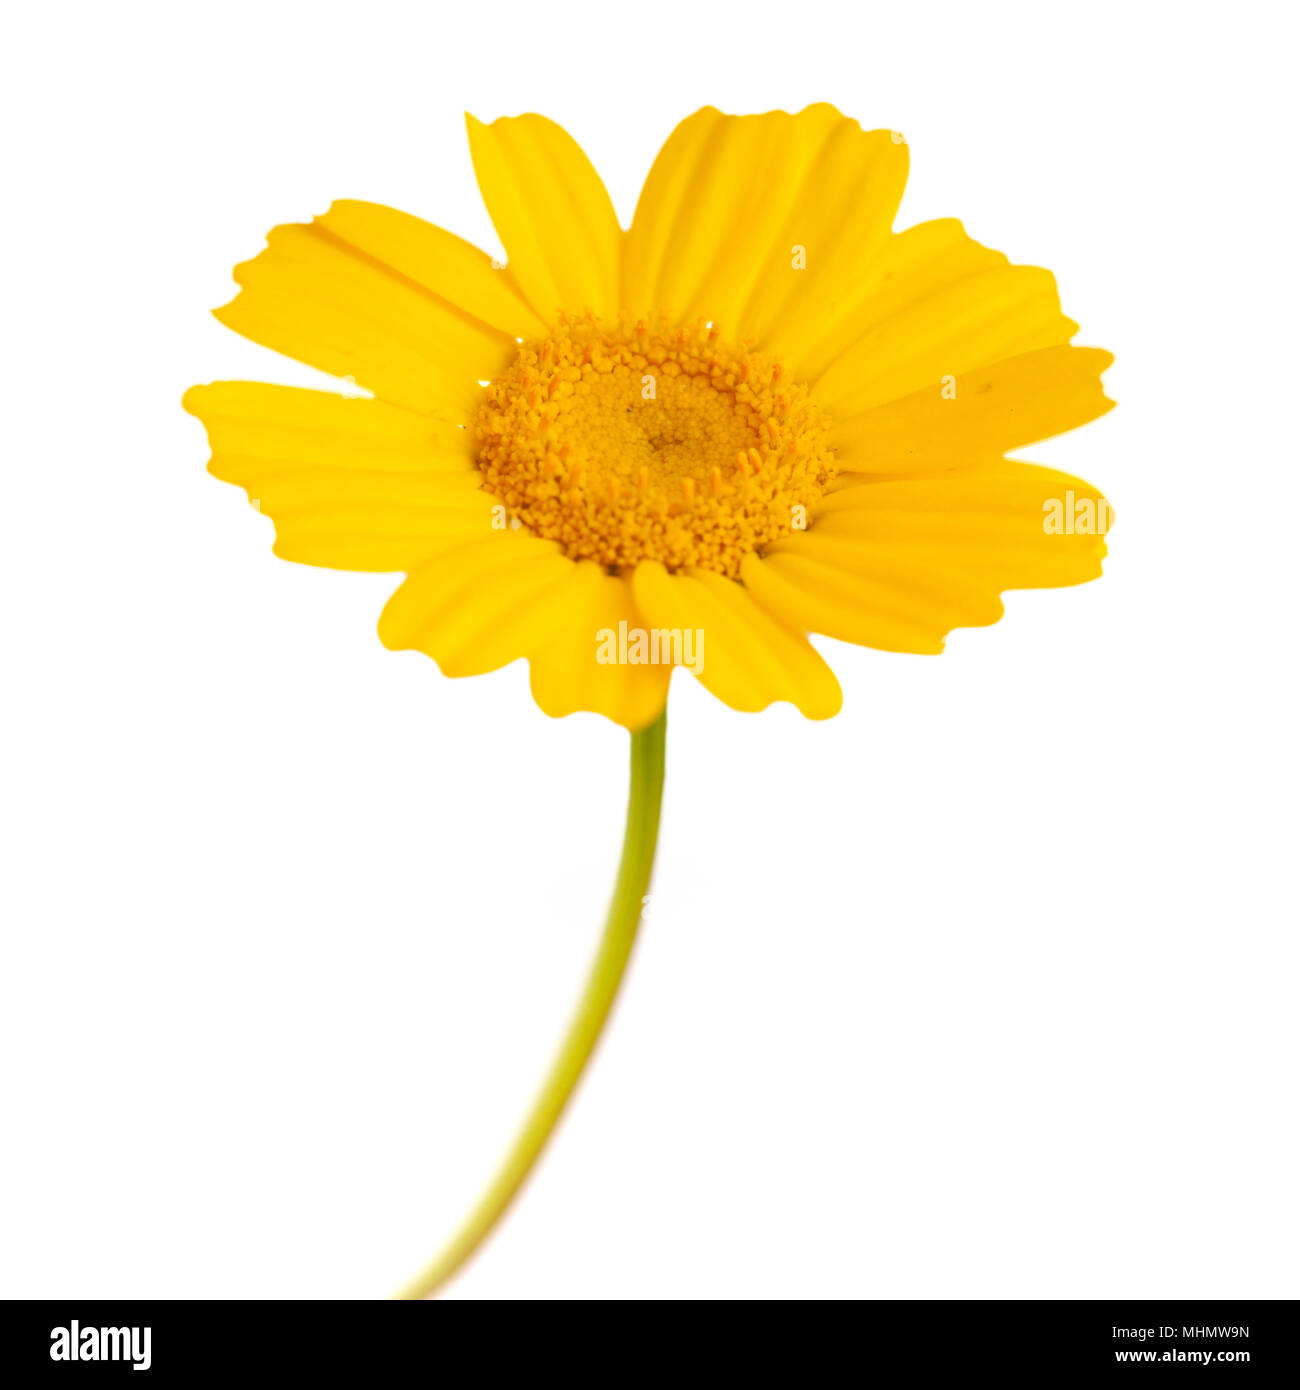 single All-yellow garland chrysanthemum isolated on white background Stock Photo